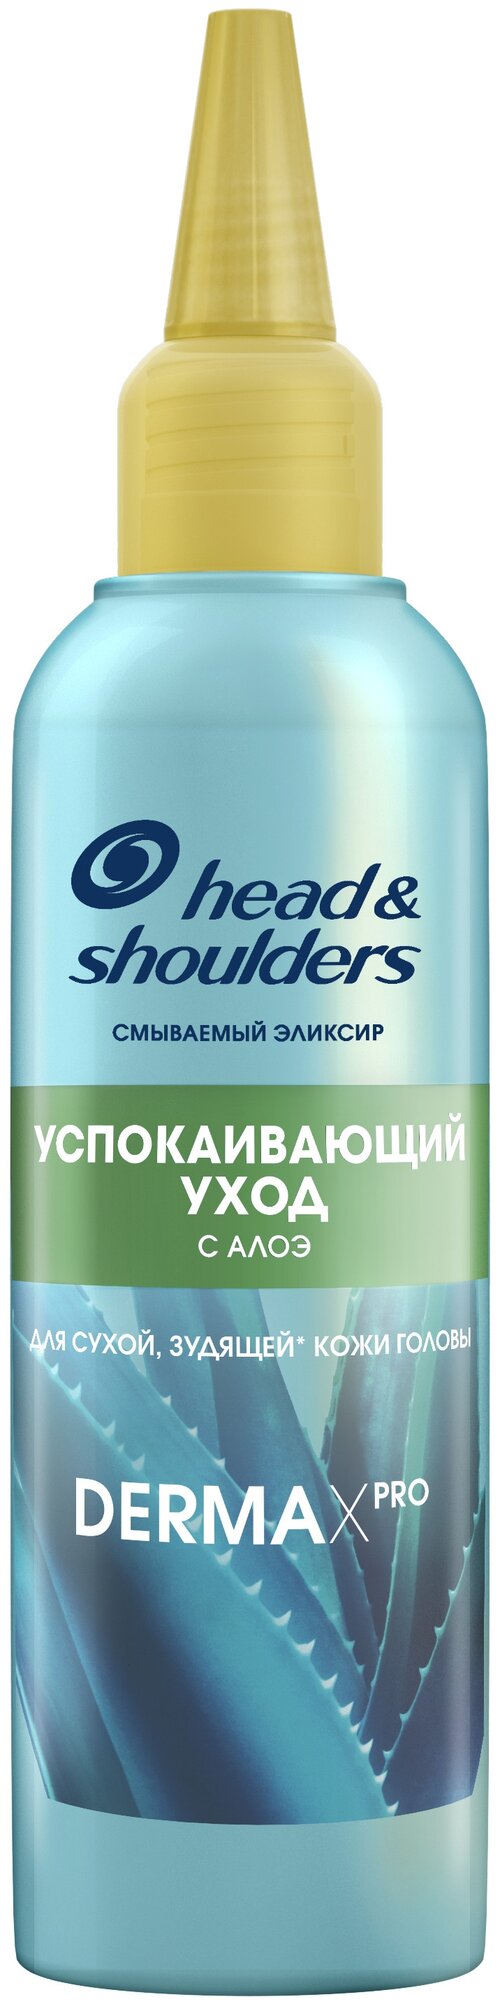 Head & Shoulders эликсир Derma X Pro Успокаивающий уход, 145 г, 145 мл, бутылка